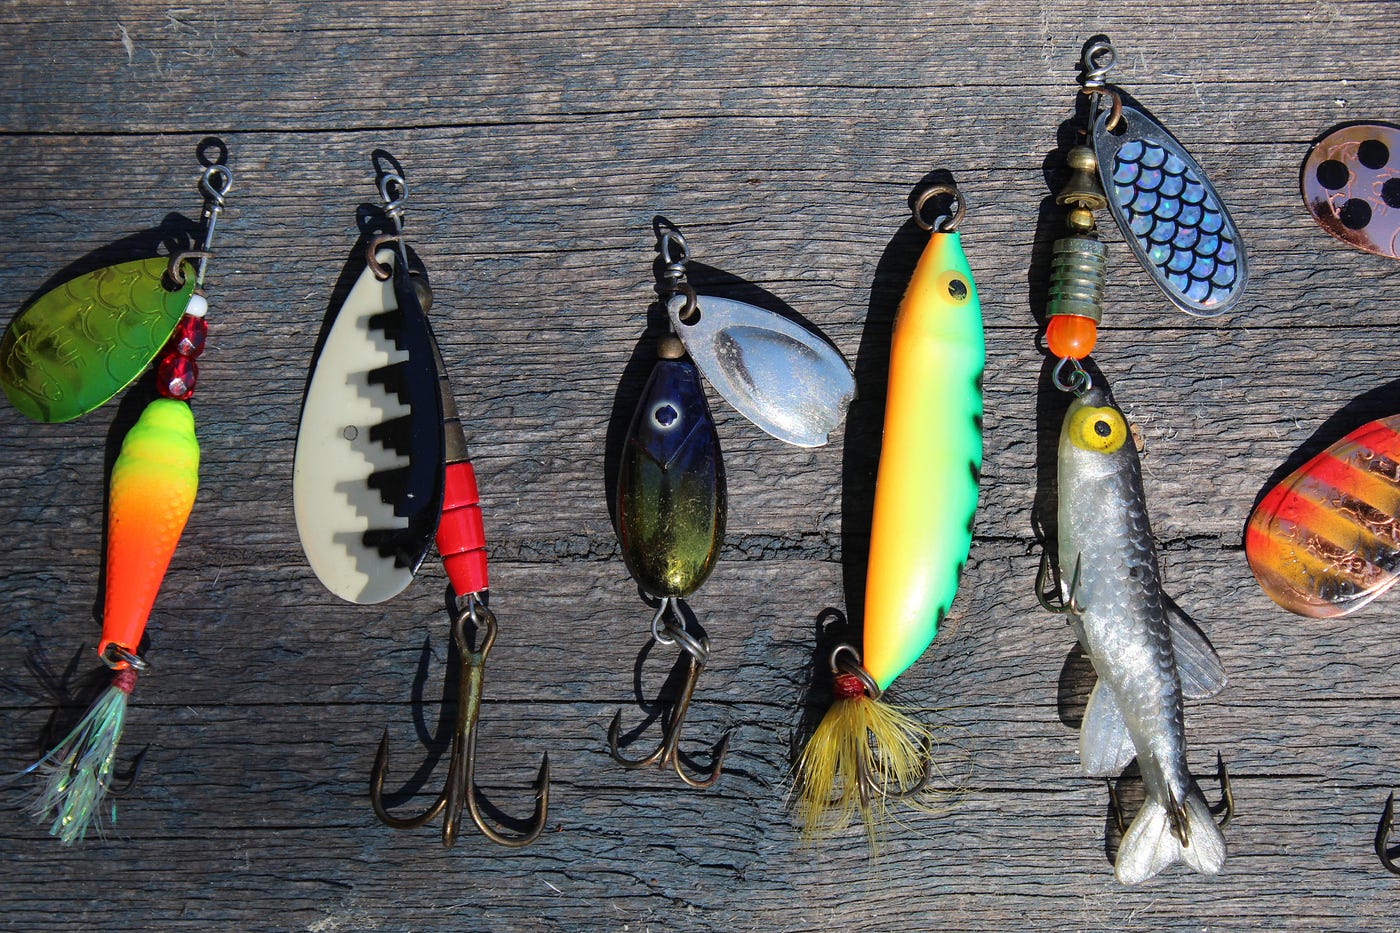 Fishing: Shop All Gear & Equipment